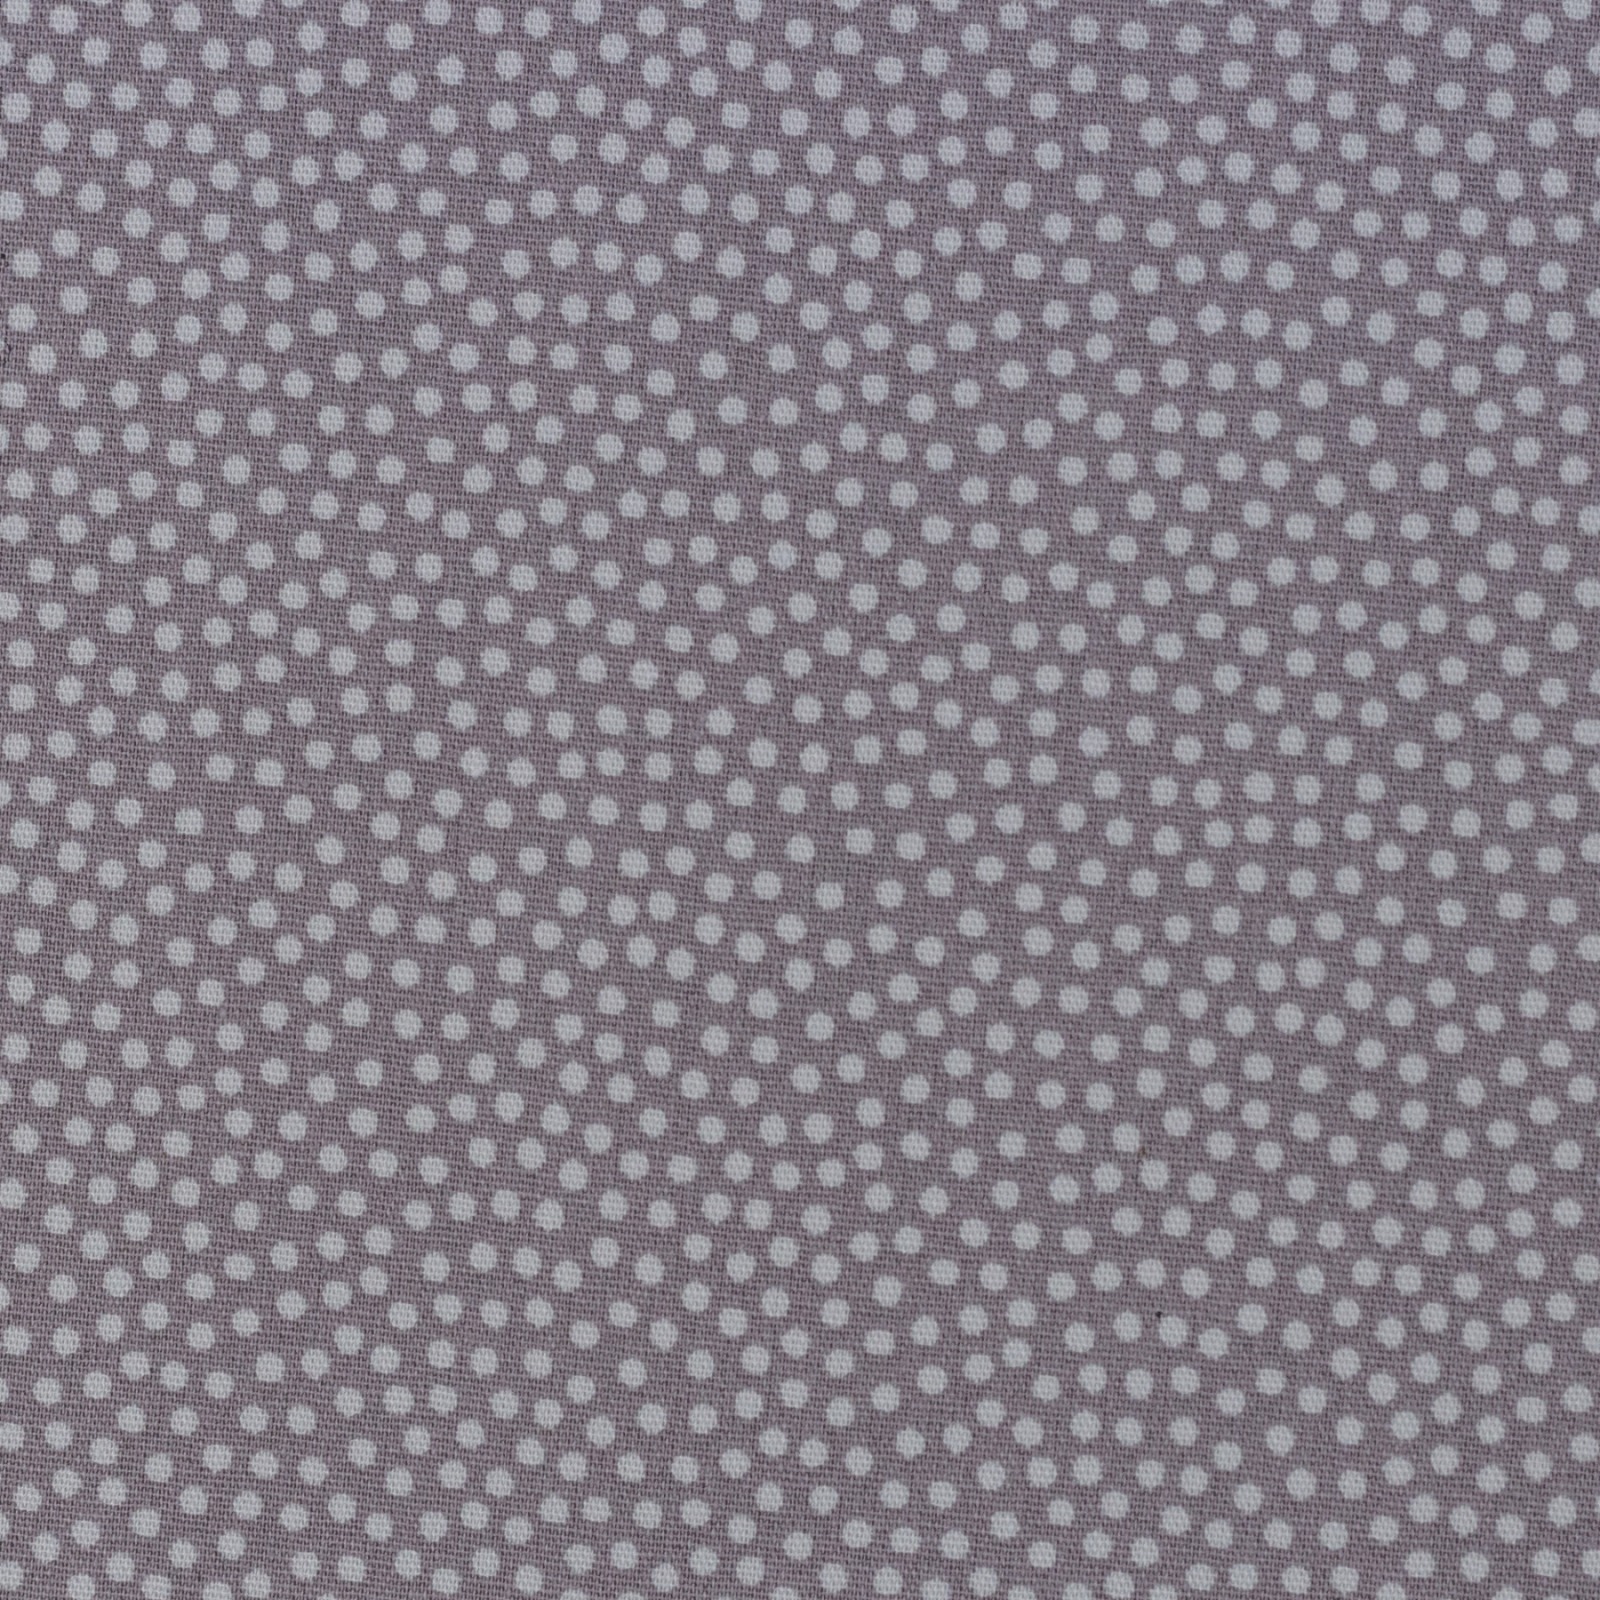 Baumwollwebware - unregelmäßige Punkte - hellgrau Ton in Ton - 100 Baumwolle - Dotty - Swafing